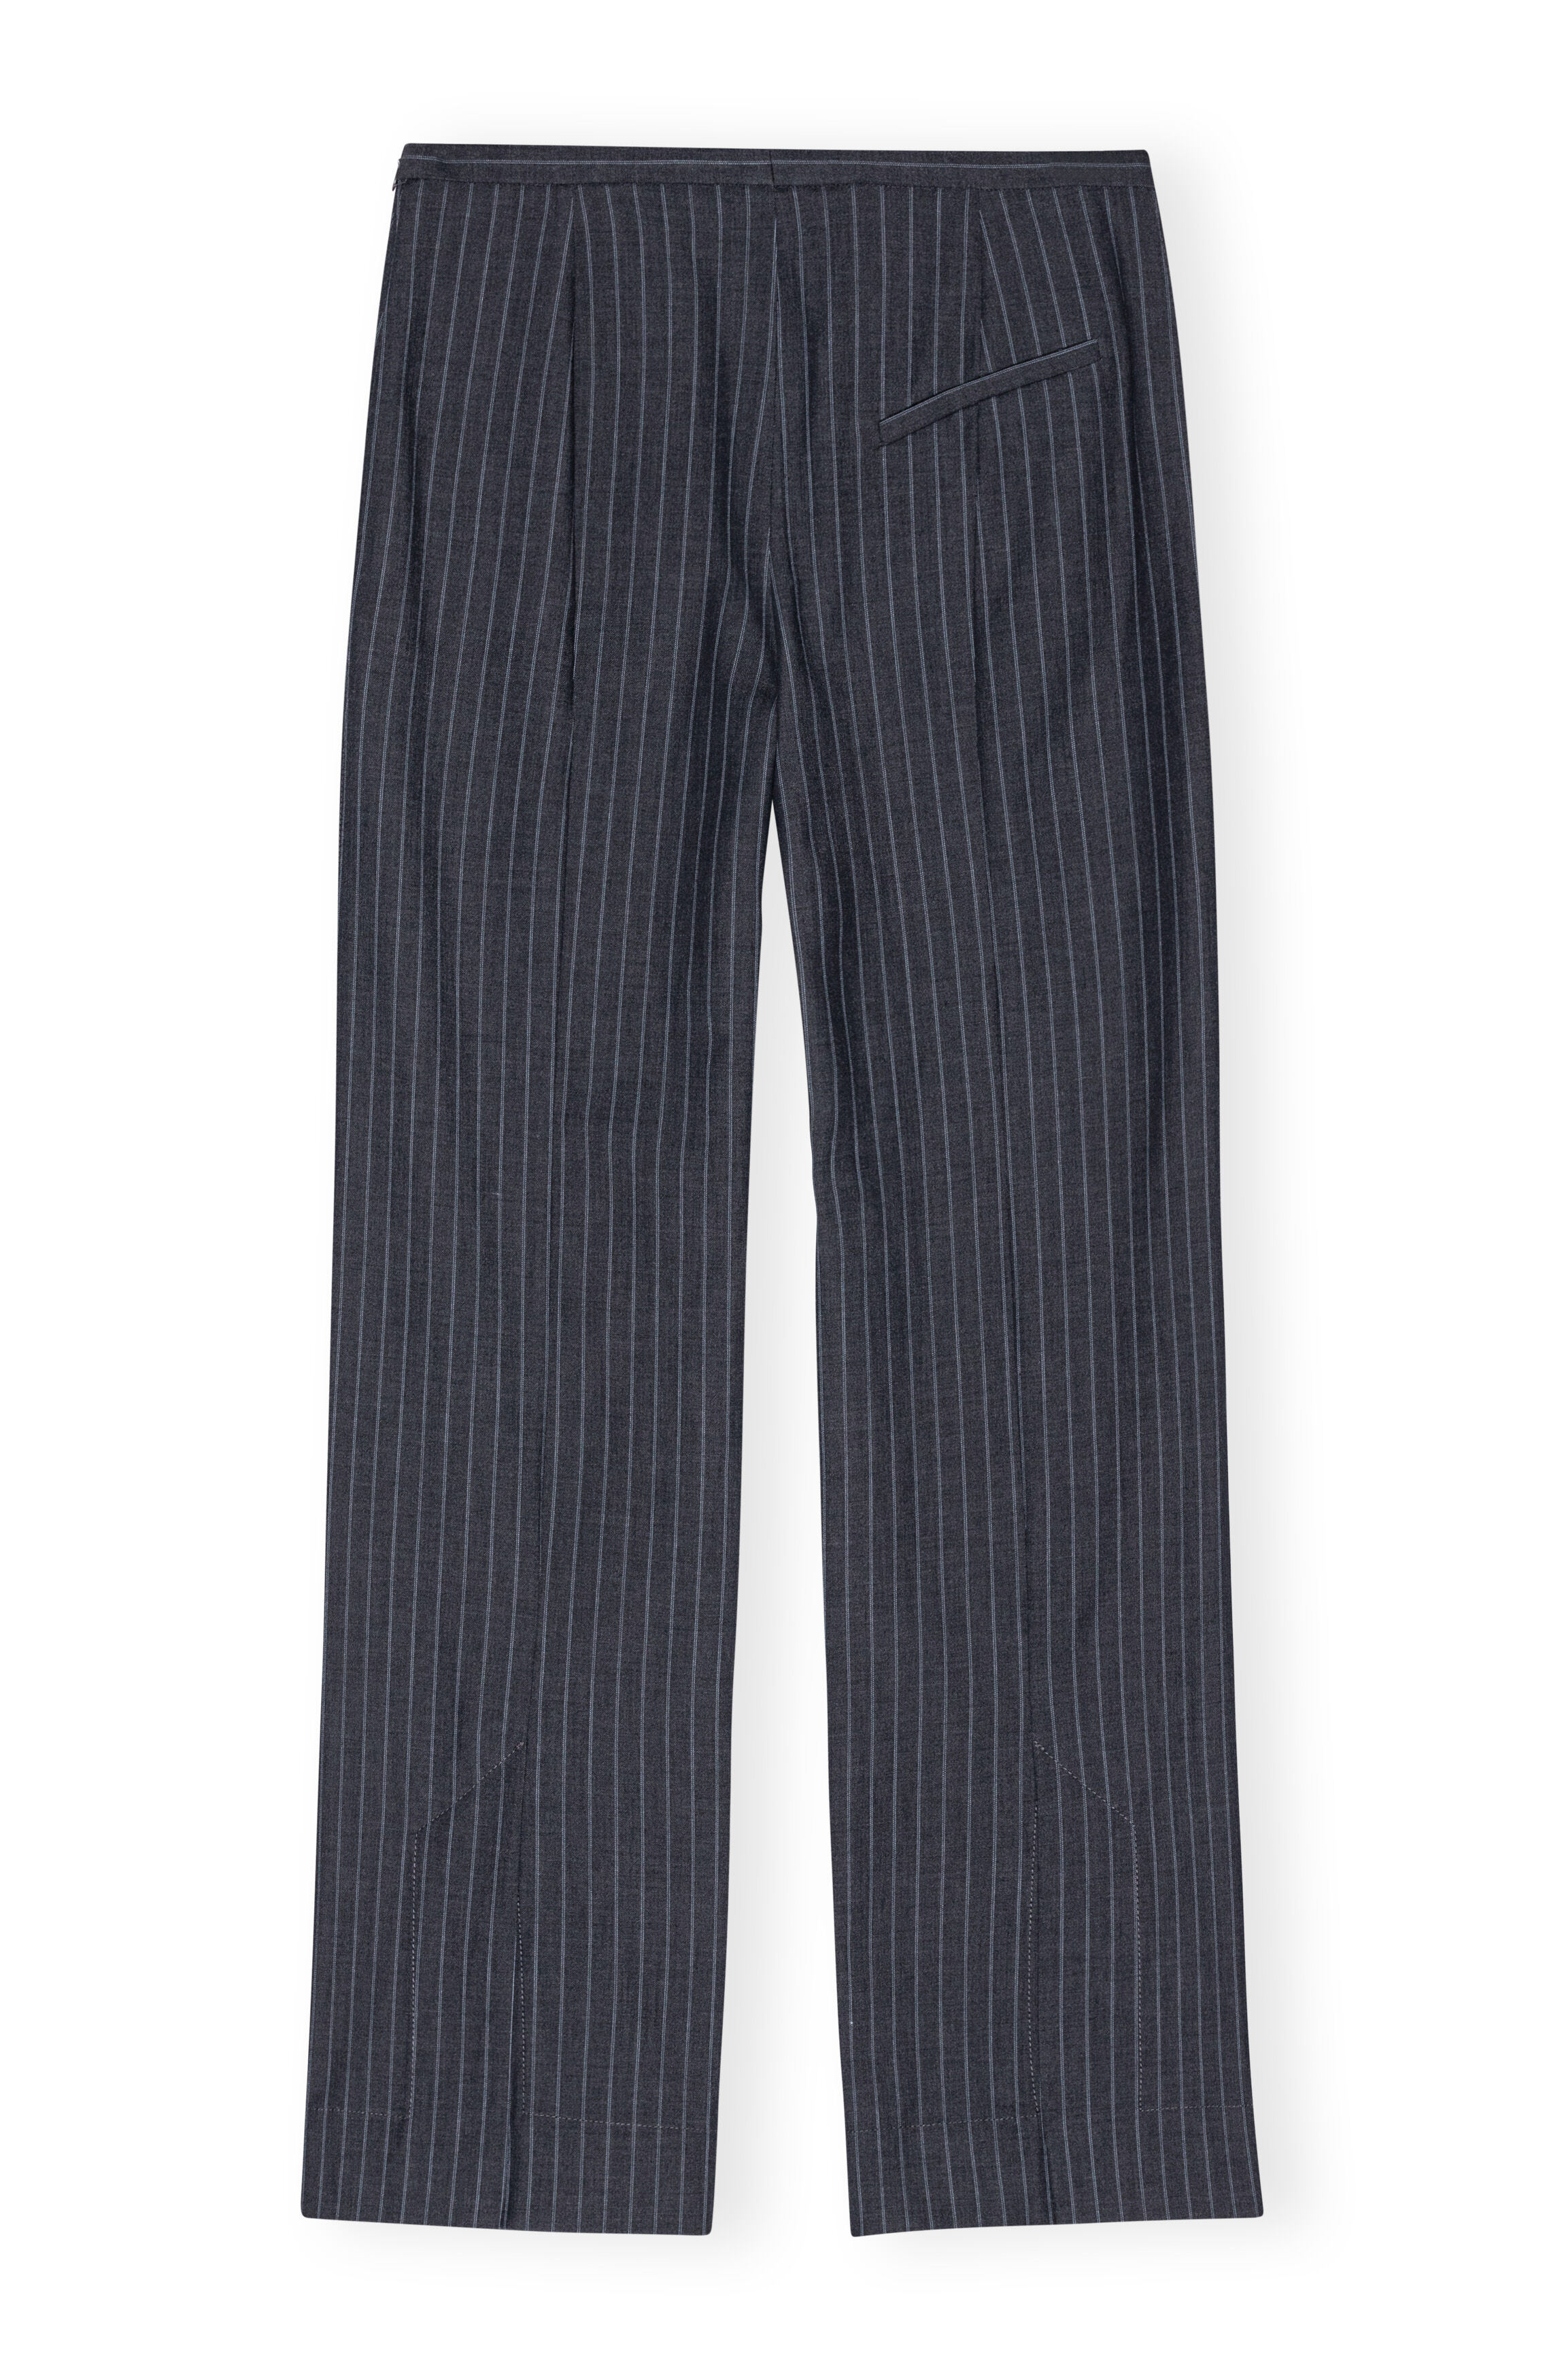 Downing Pants - slim - Navy Black Wide Stripe – Paisley & Gray